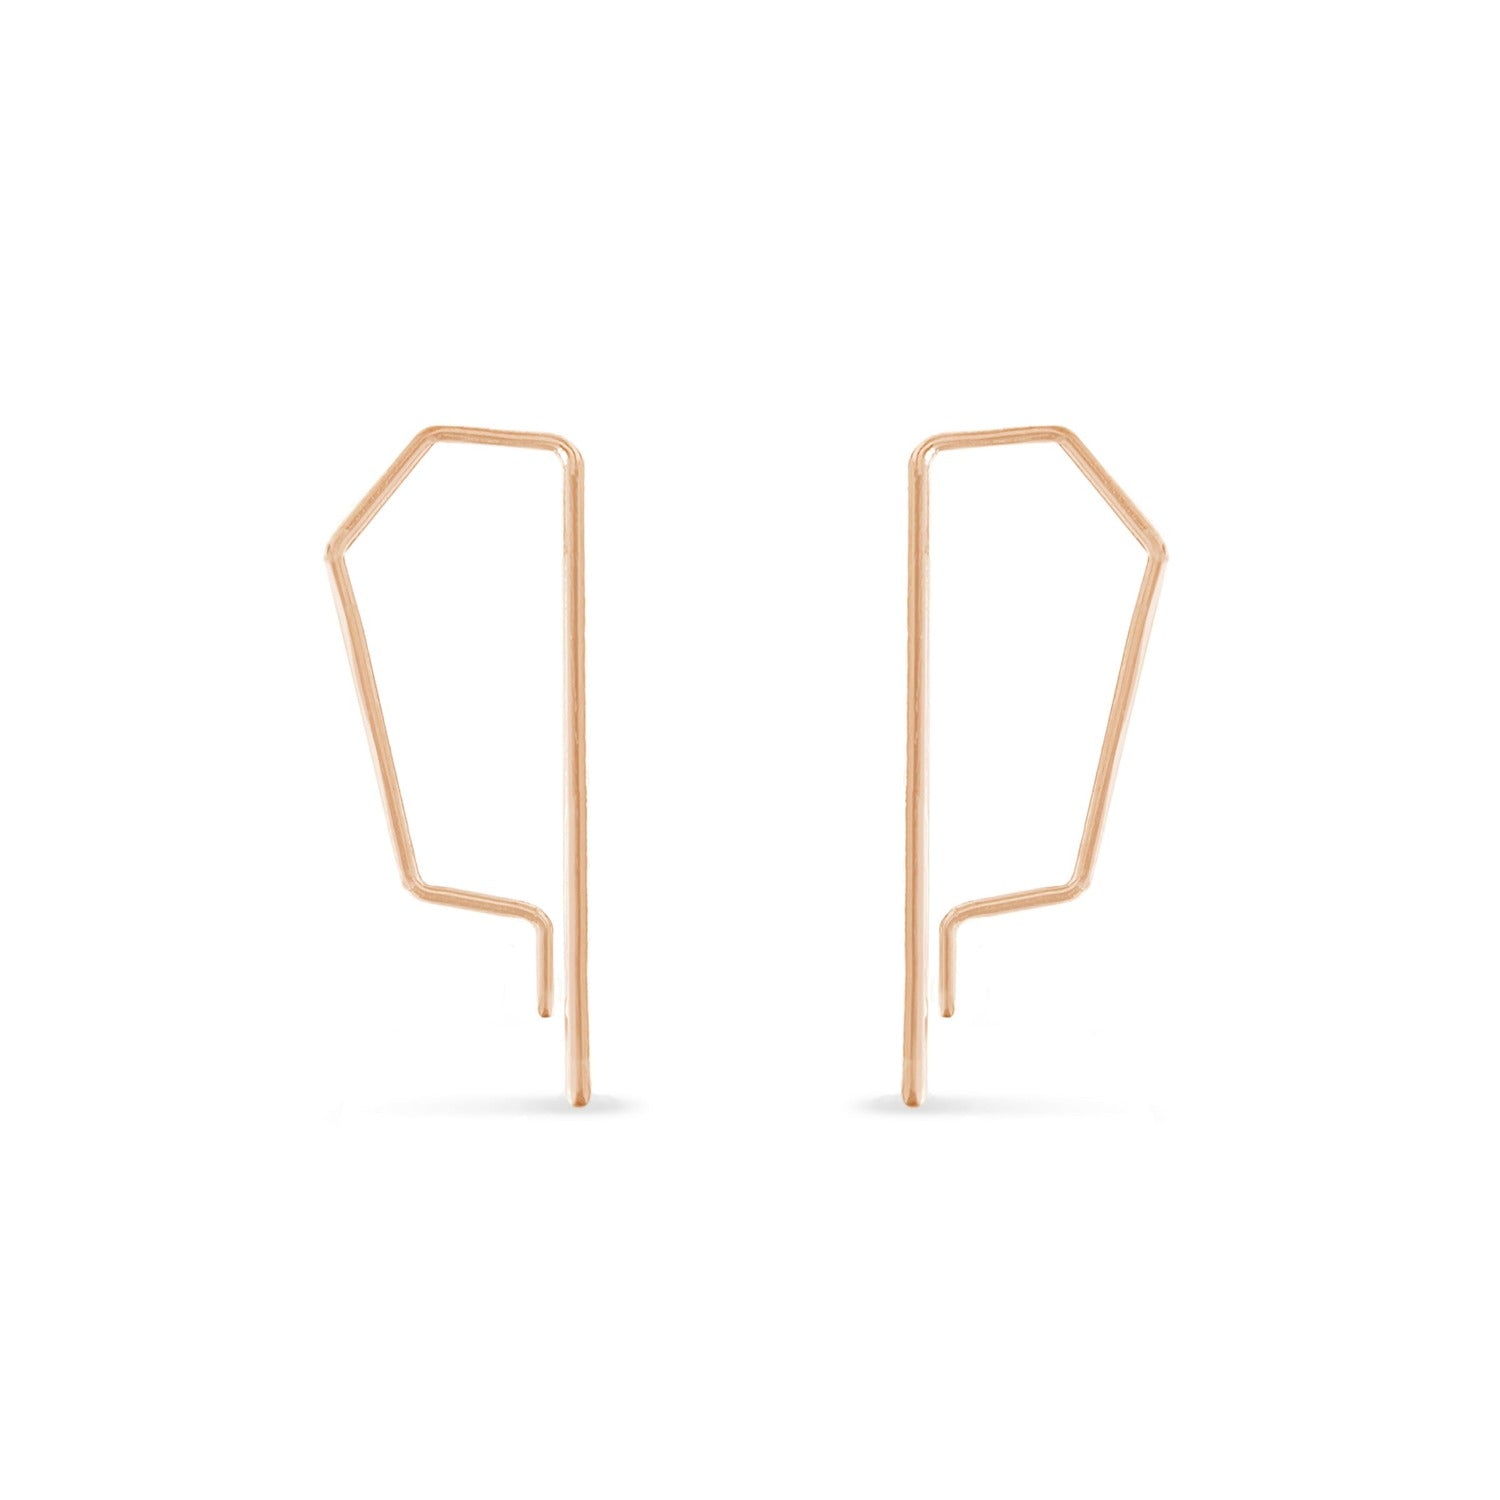 14K rose gold delicate wire hoop earrings